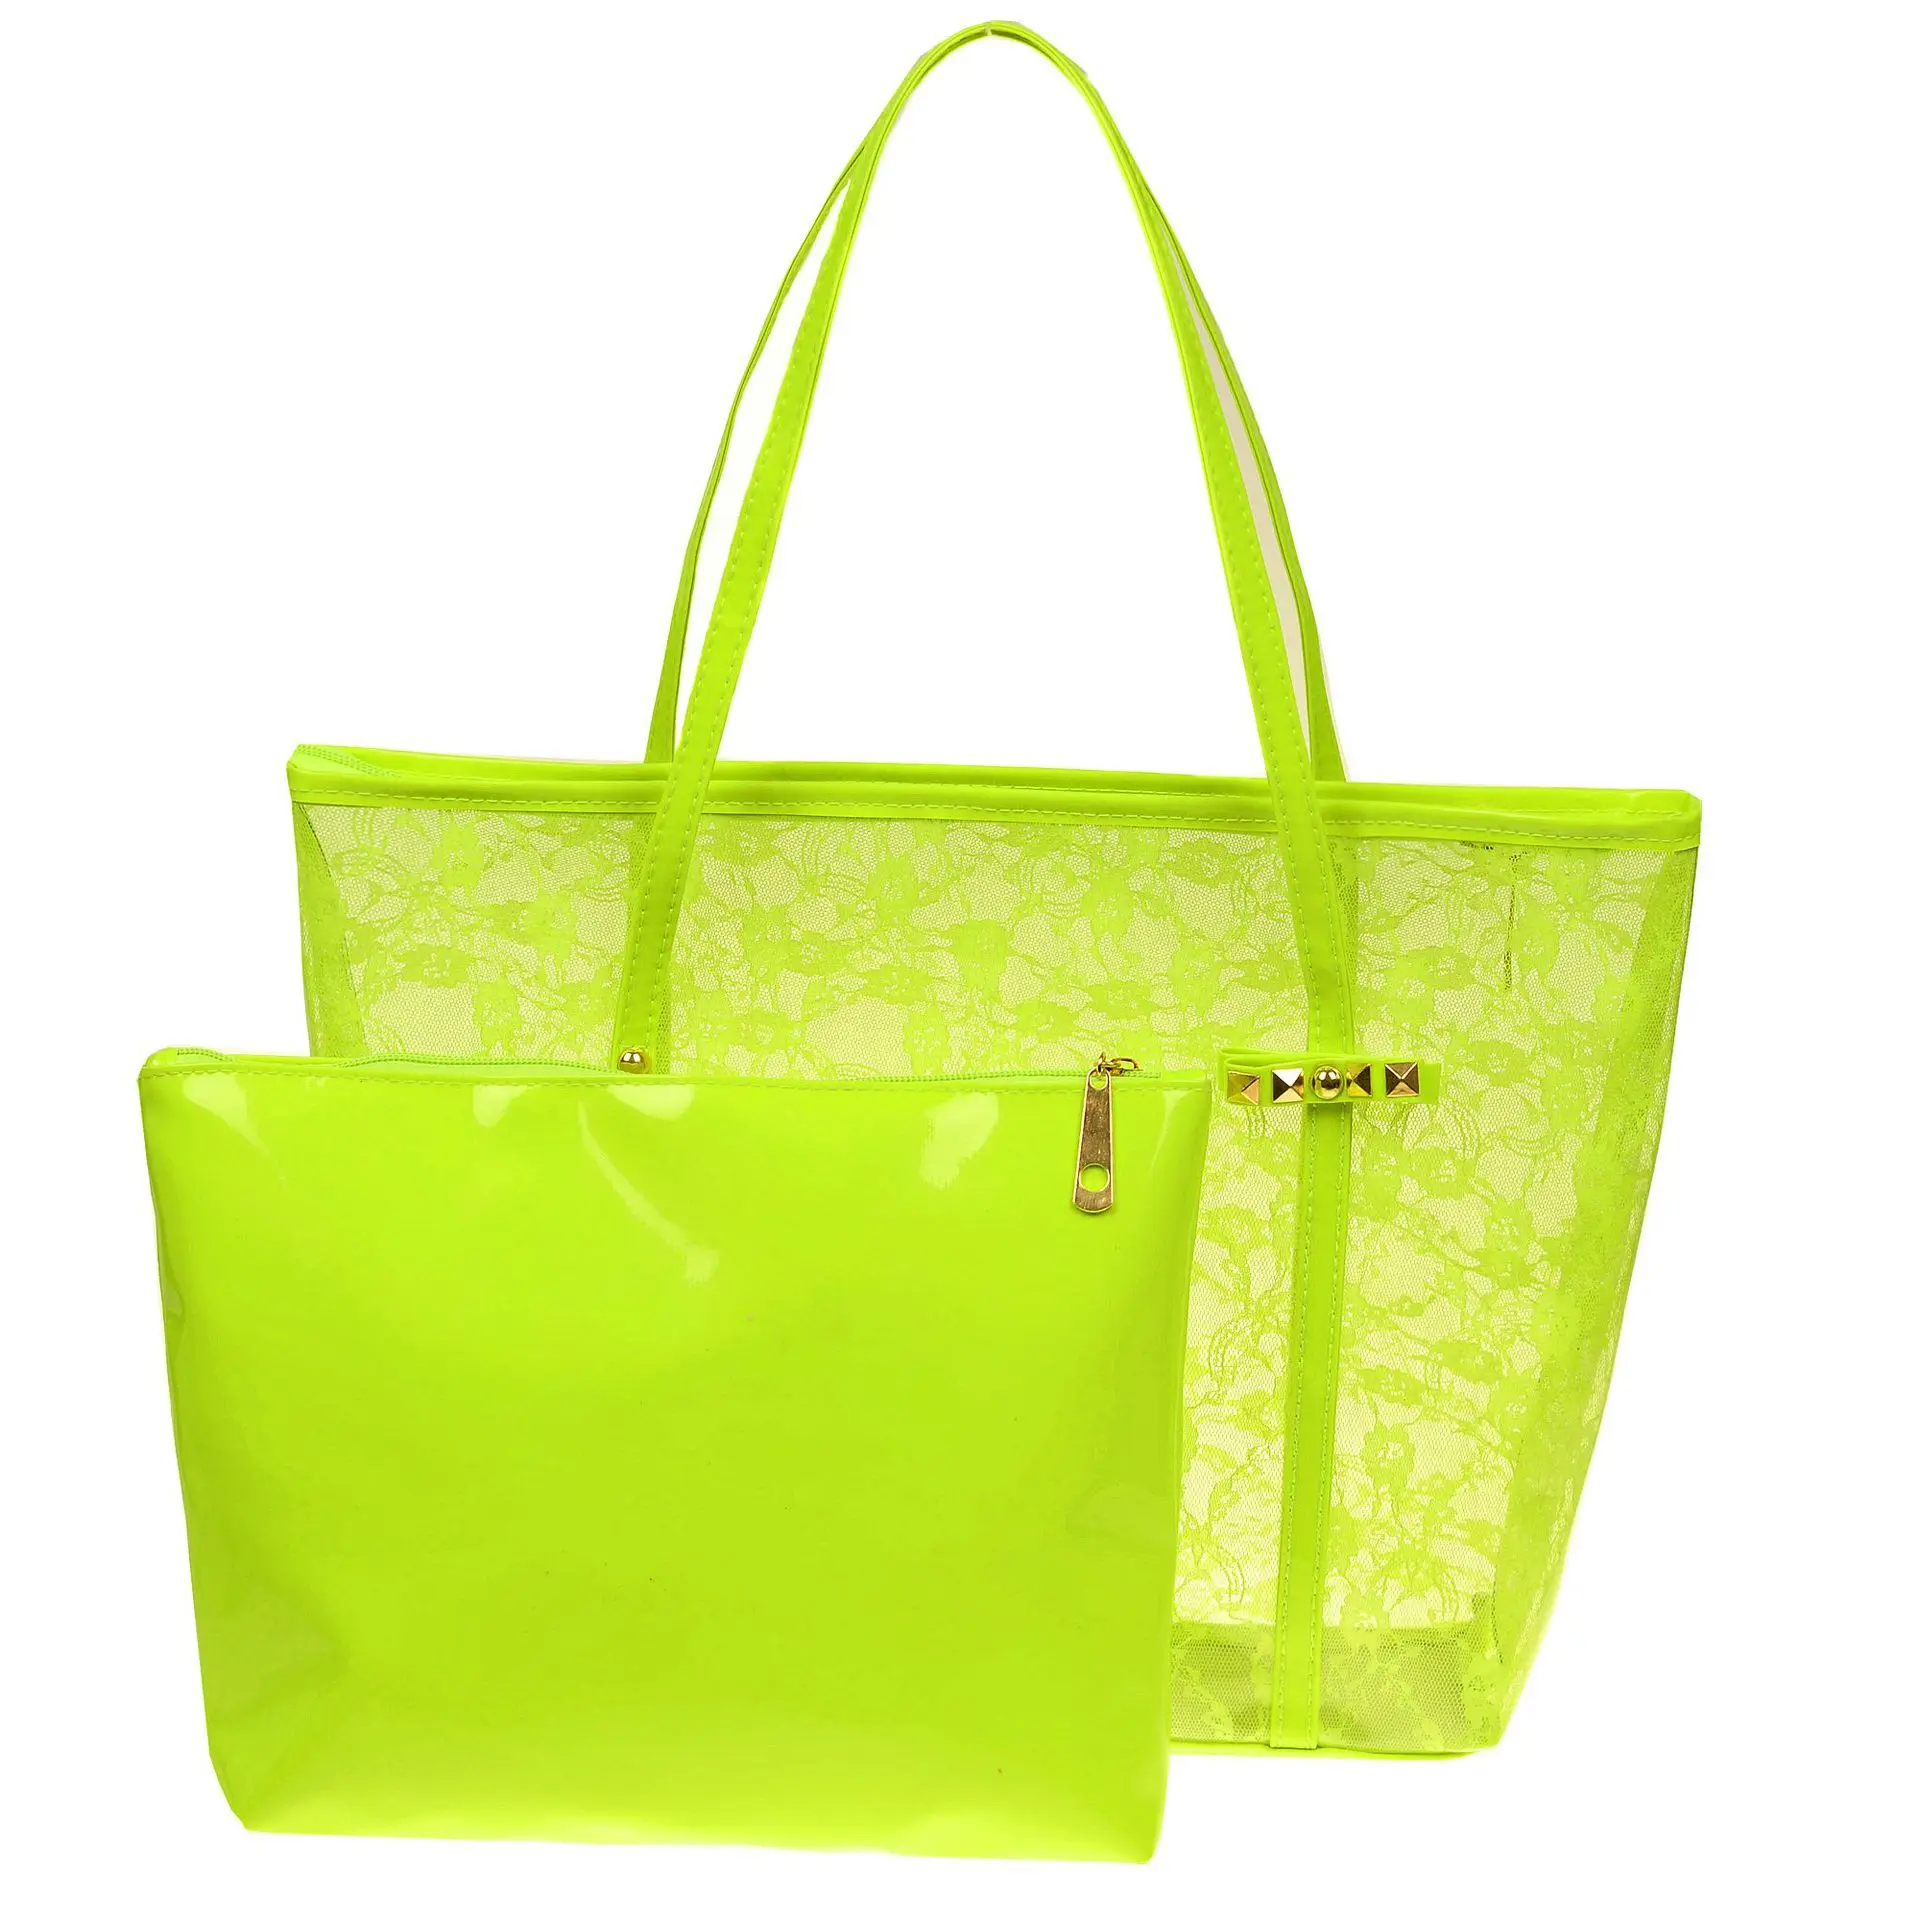 Source Neon green clear pvc women's bag handbag transparent clear